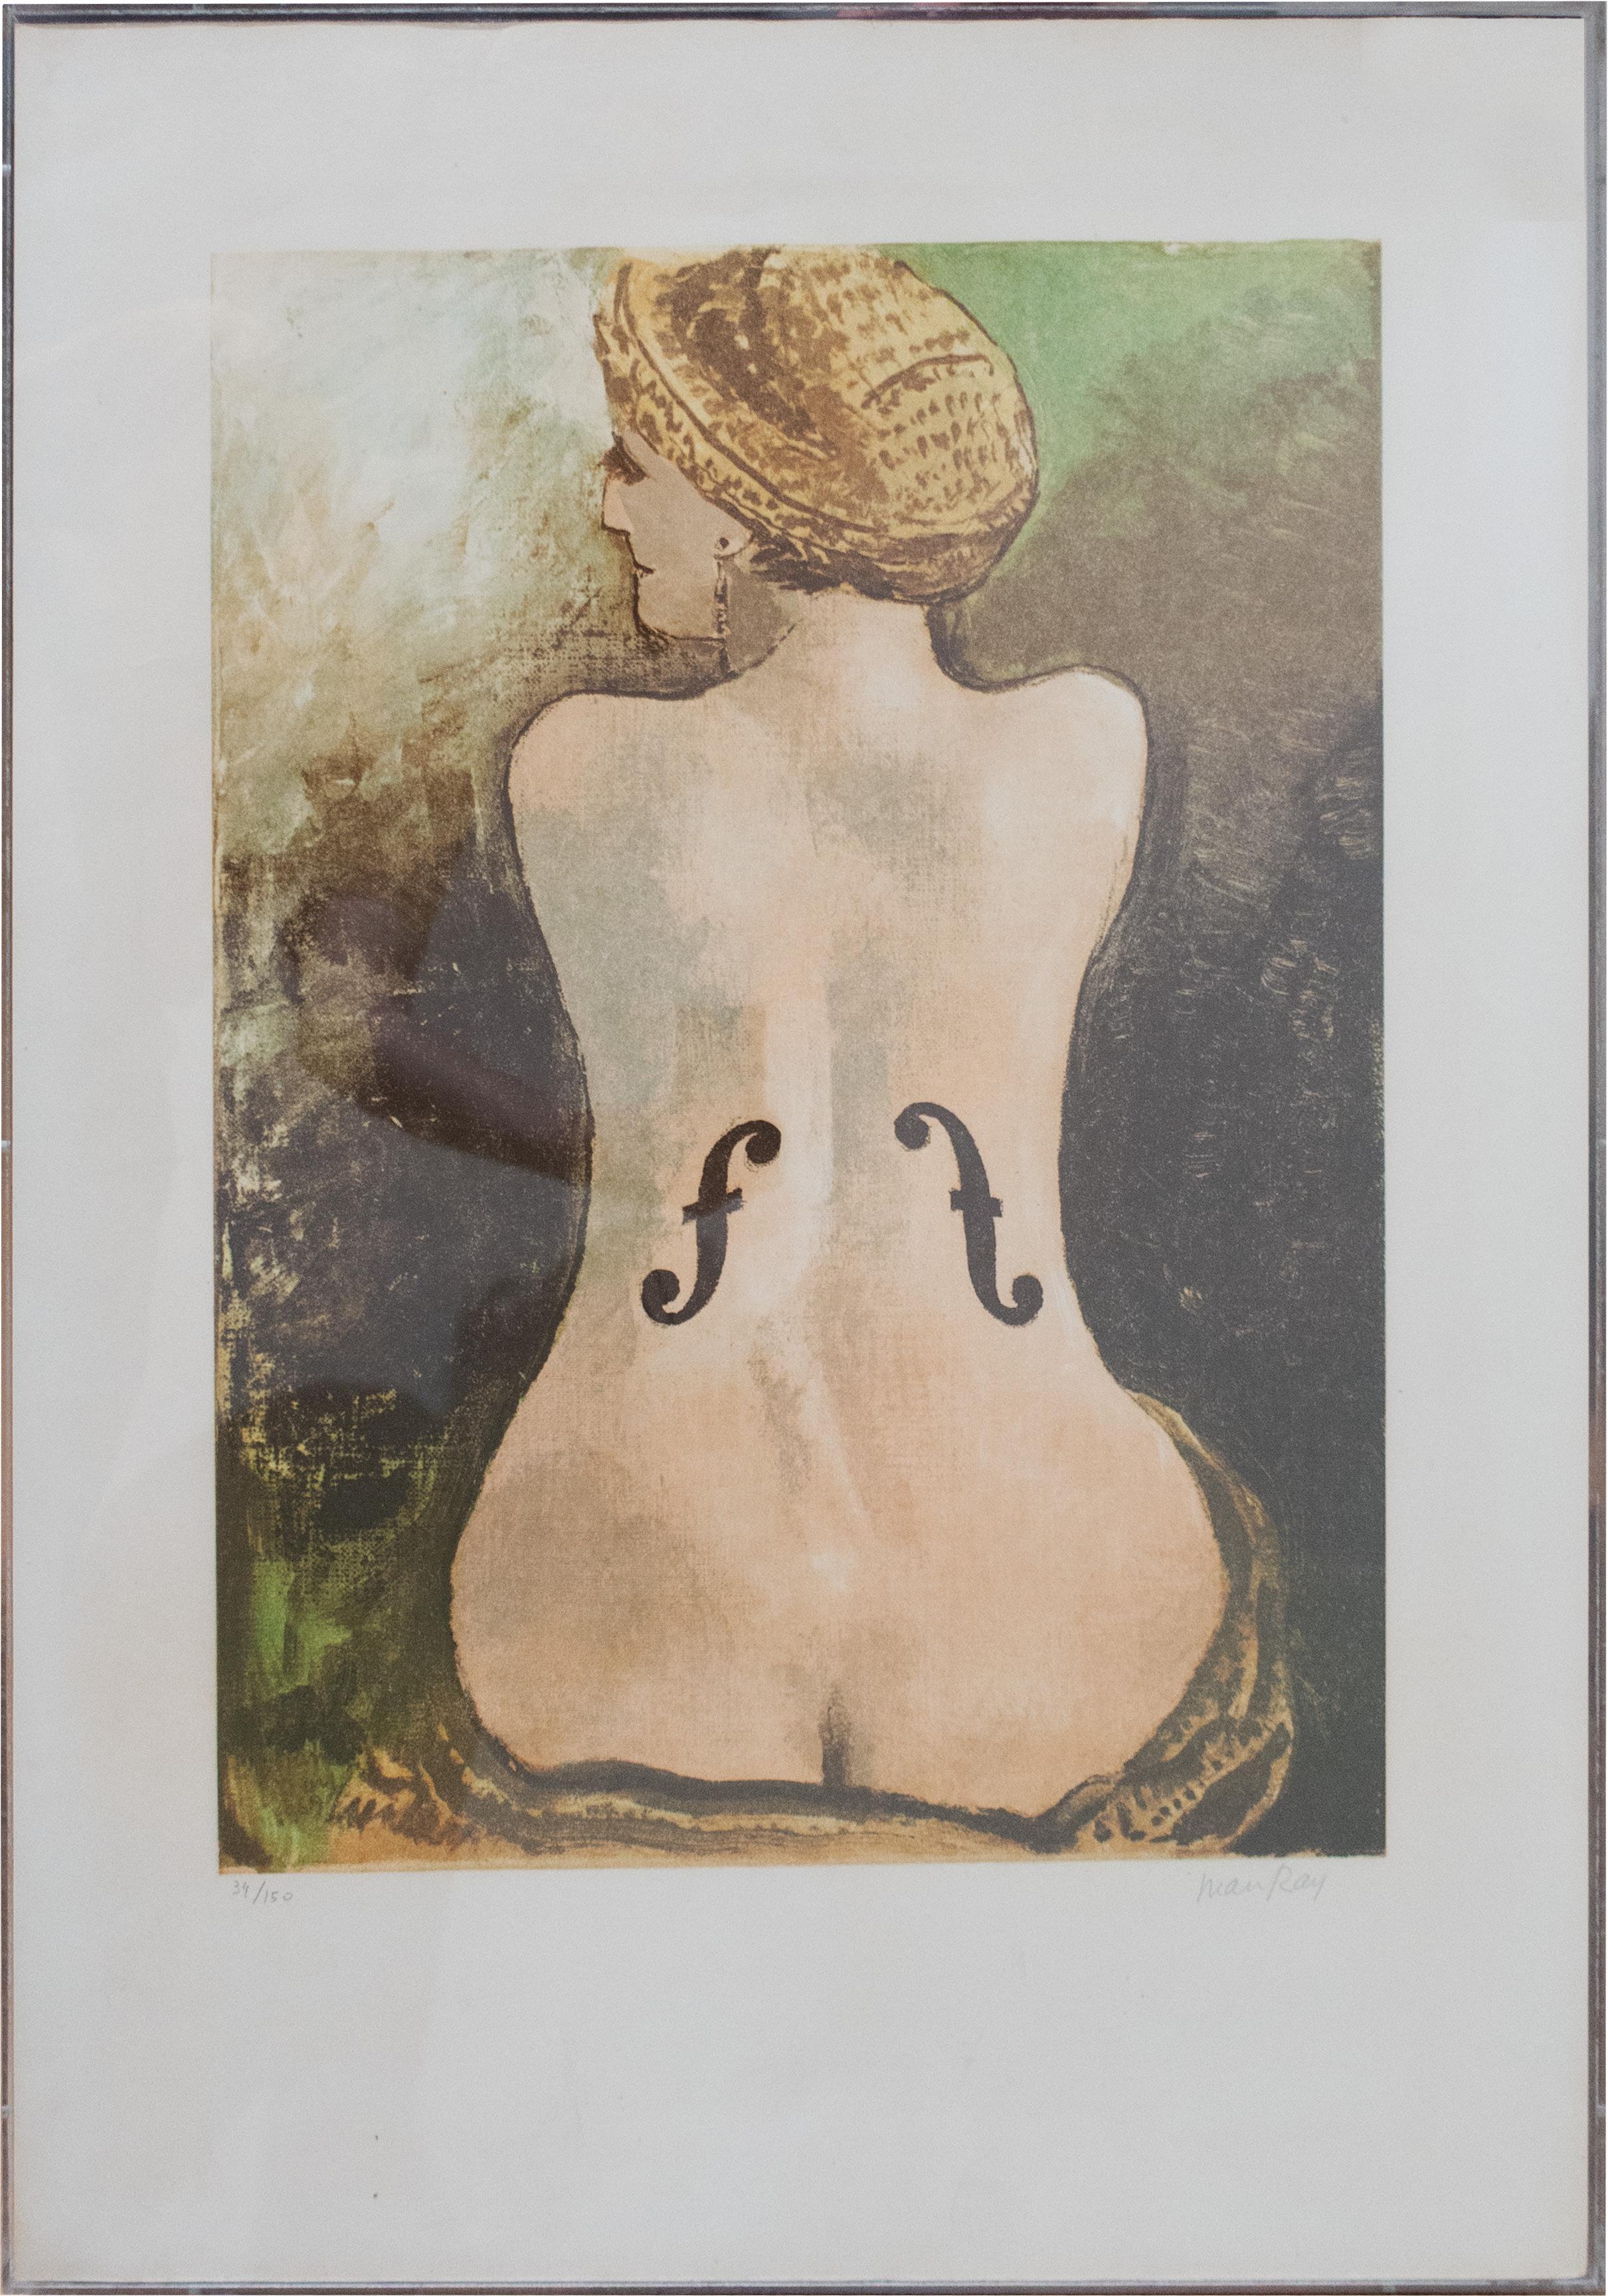 Le Violon d'Ingres, 1969, Litografia, Dada, Classic, Nudo - Print by Man Ray